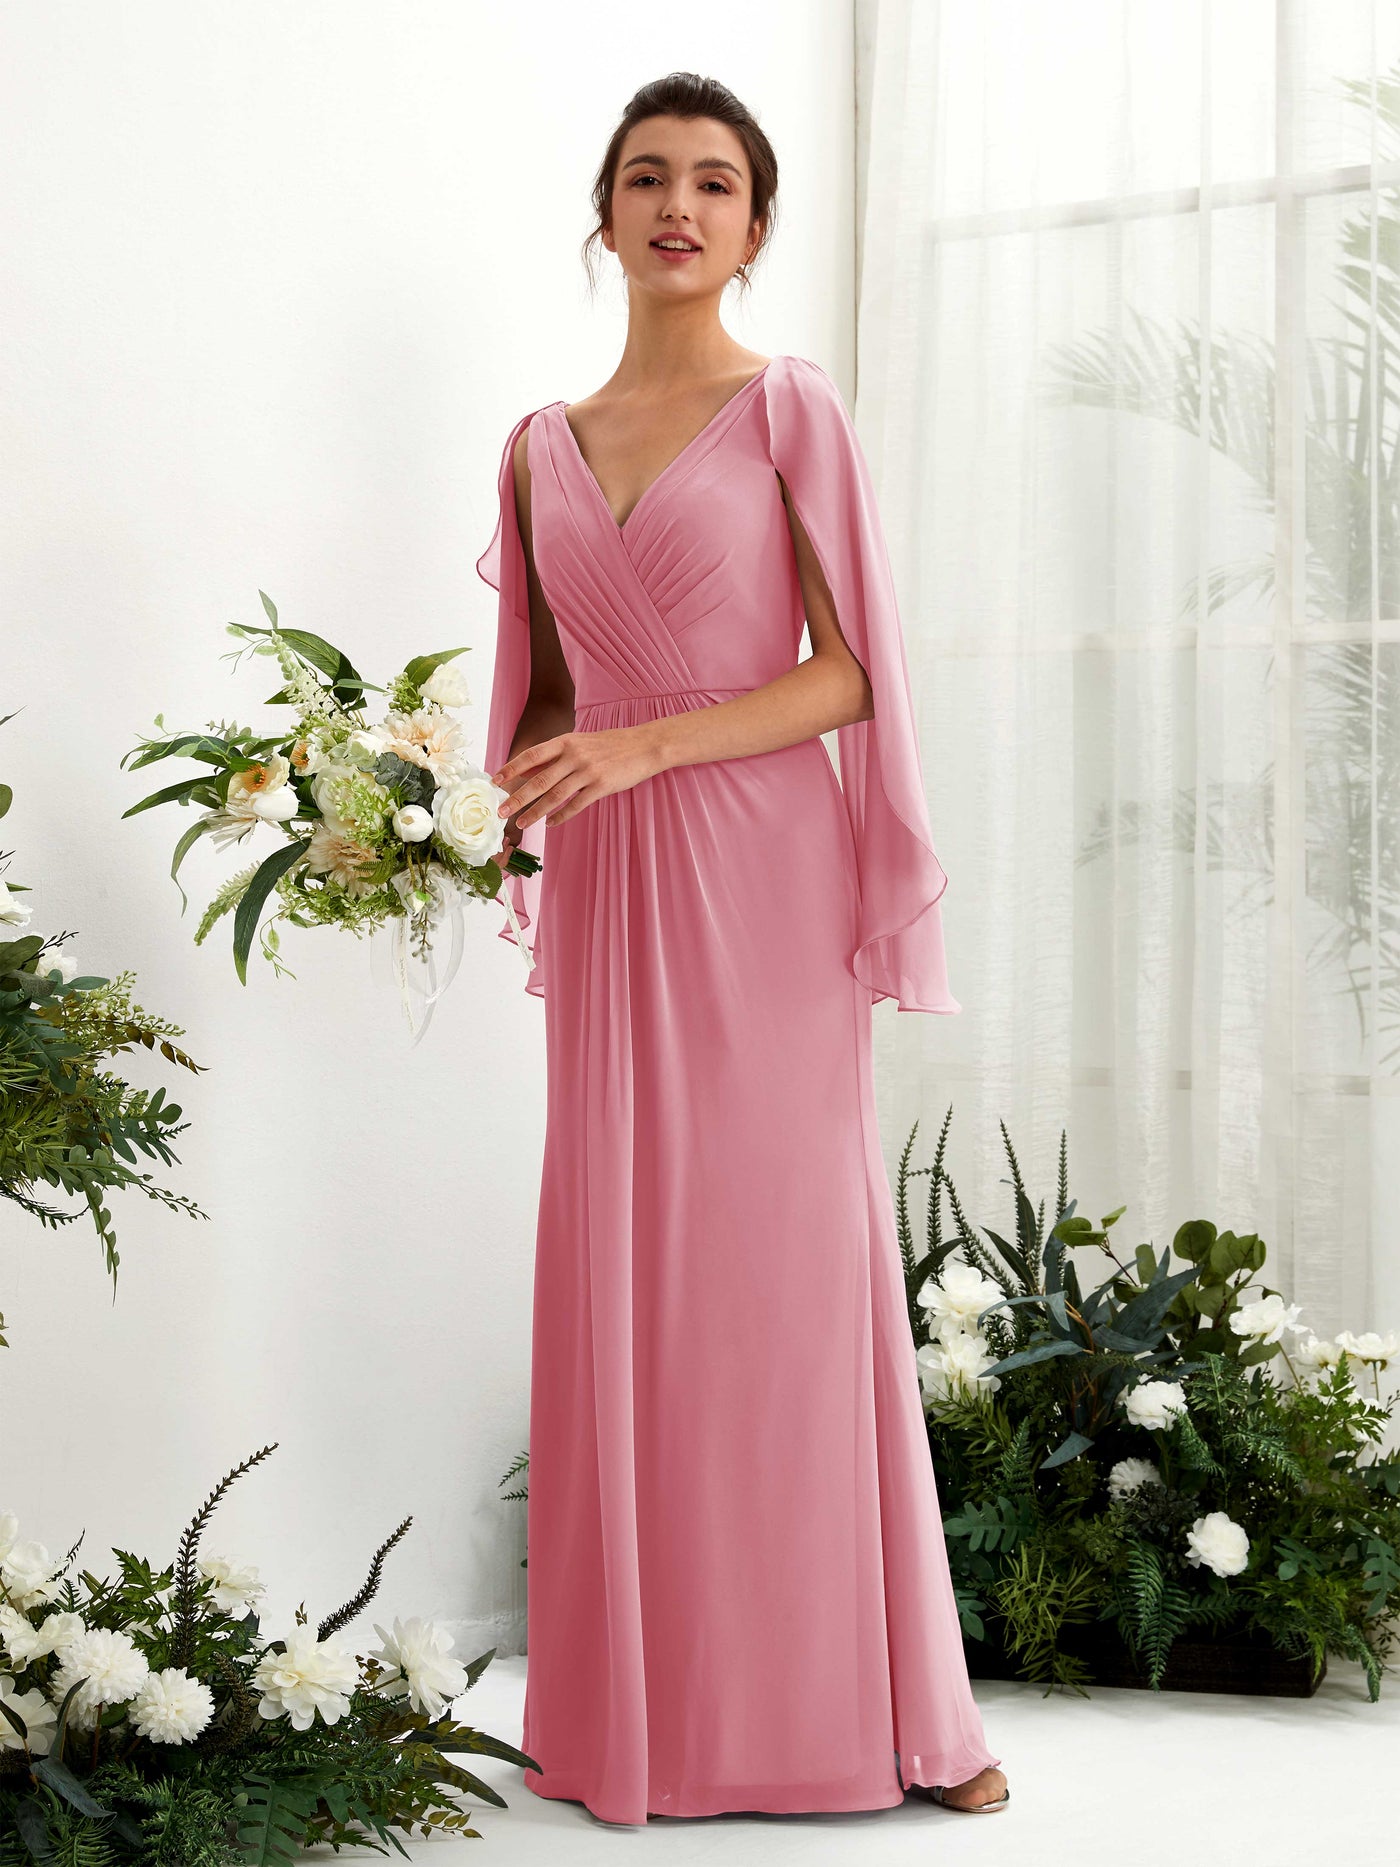 Desert Rose Bridesmaid Dresses Bridesmaid Dress A-line Chiffon Straps Full Length Long Sleeves Wedding Party Dress (80220111)#color_desert-rose